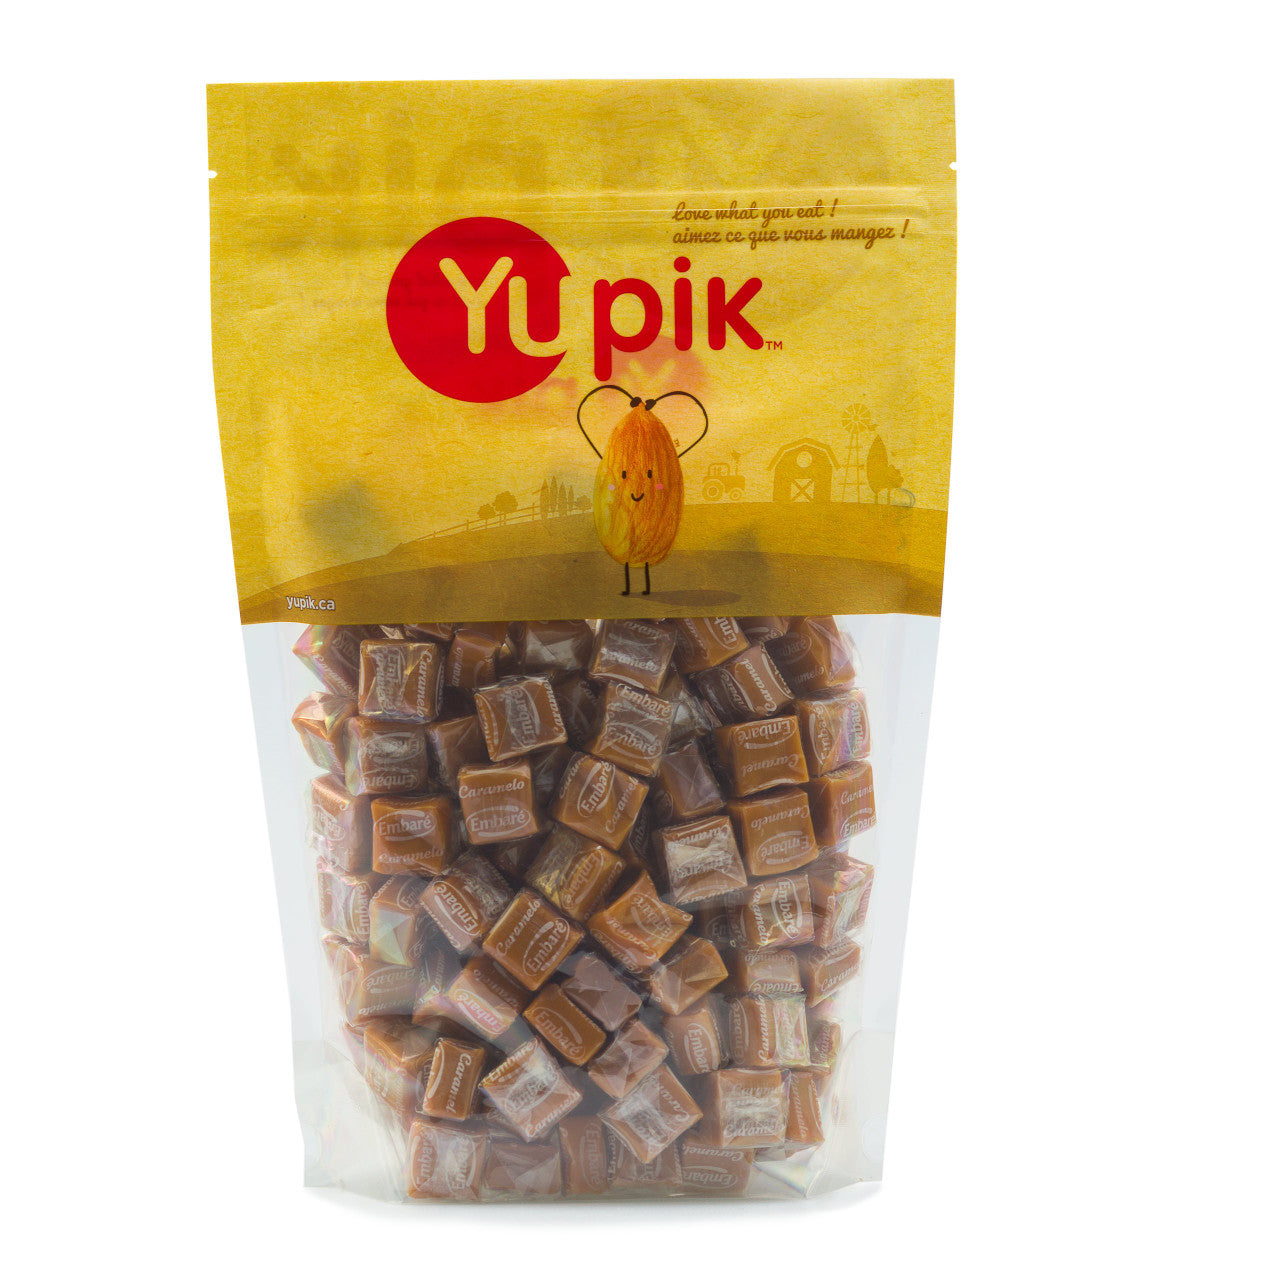 Yupik Creamy Caramel Candy, 1Kg/2.2lbs. - {Imported from Canada}